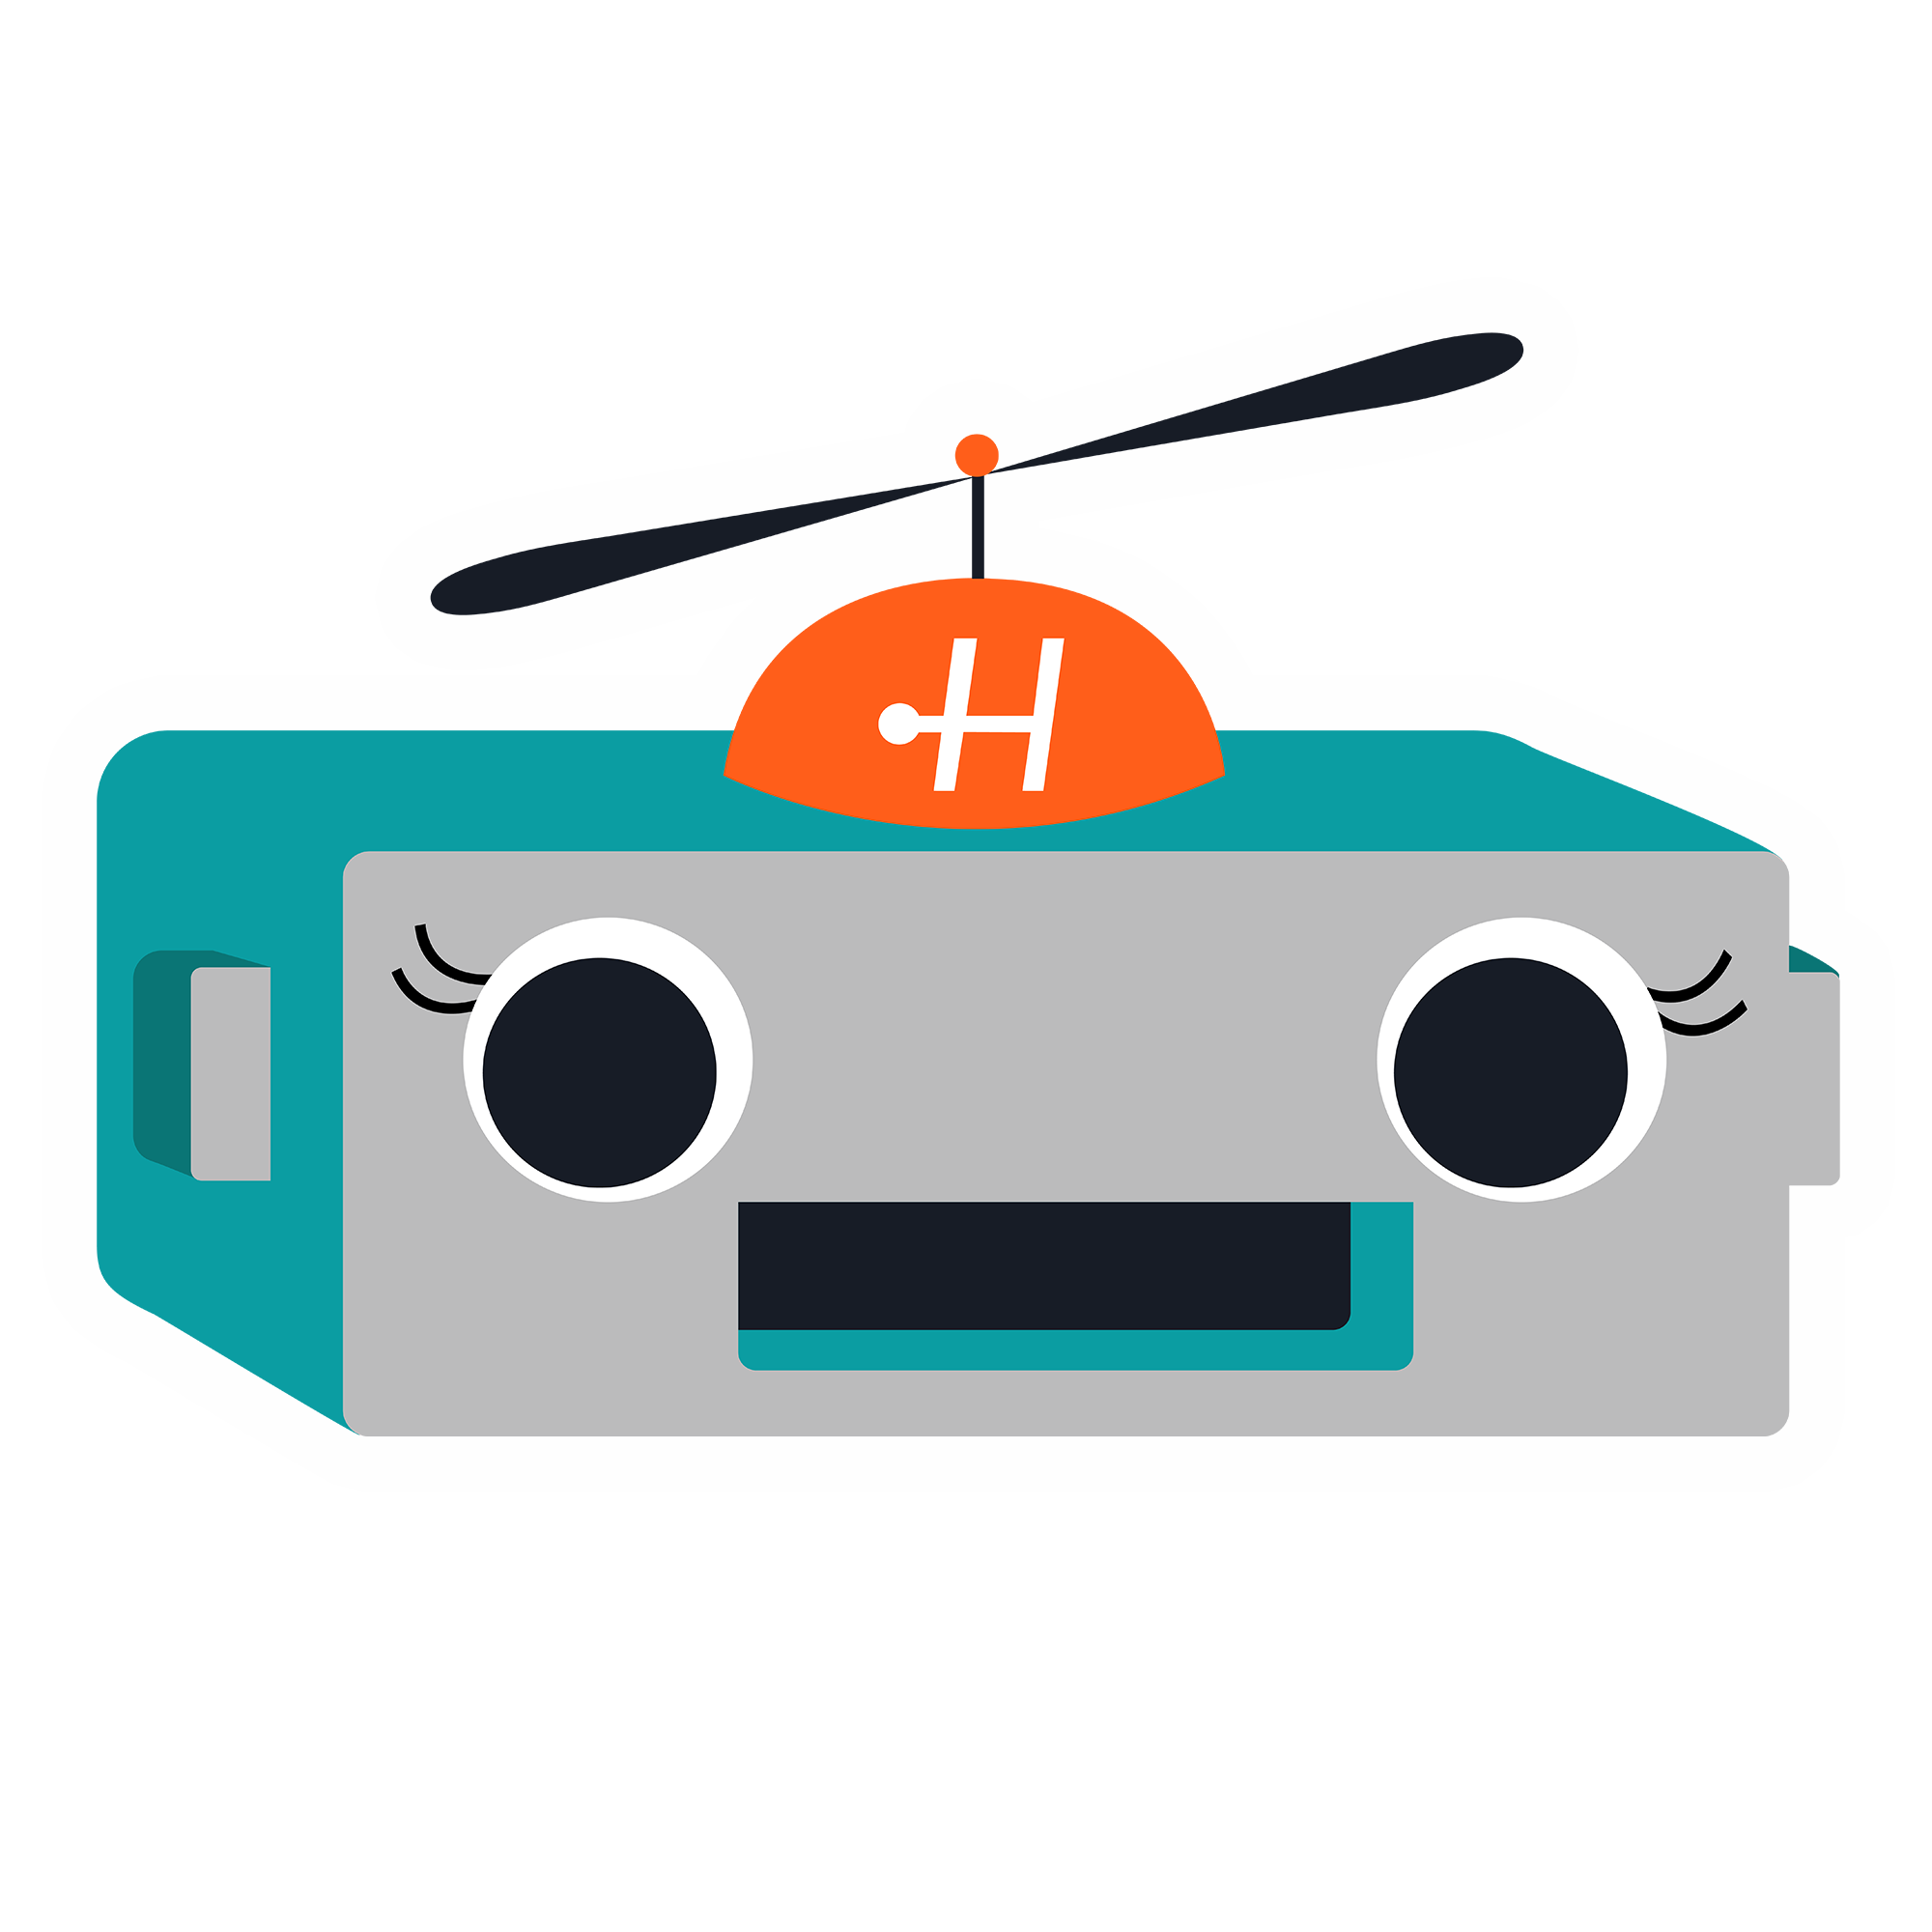 The Helperbot logo - a robot with a propeller hat